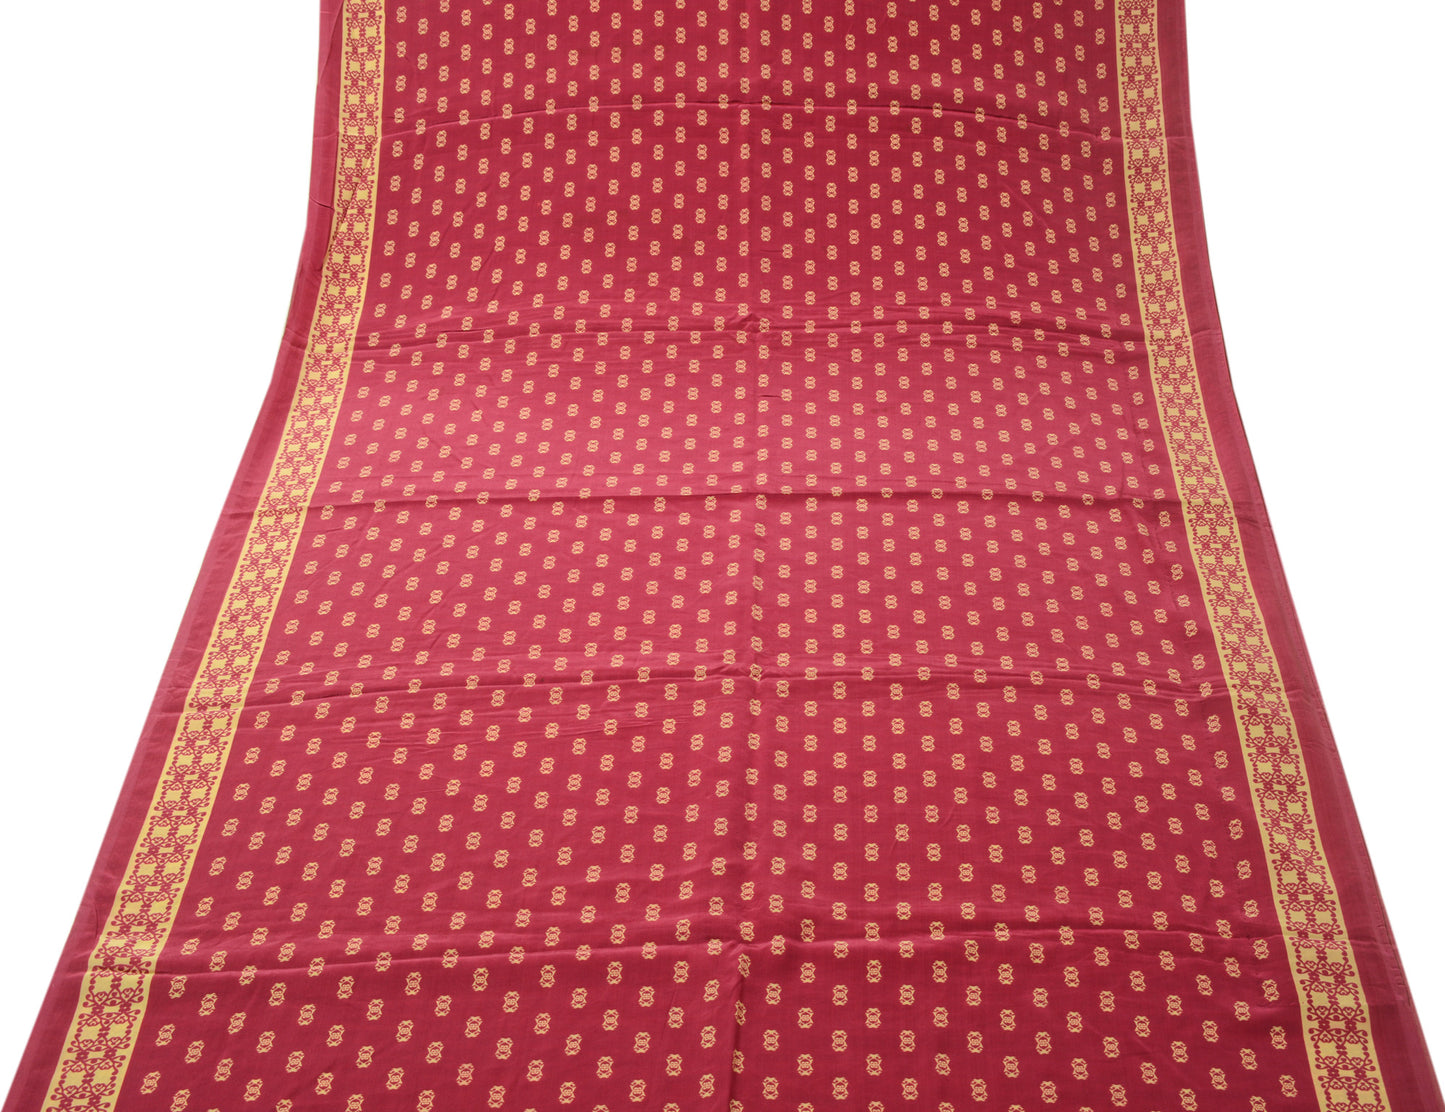 Sushila Vintage Magenta Saree 100% Pure Crepe Silk Printed Indian Soft Fabric